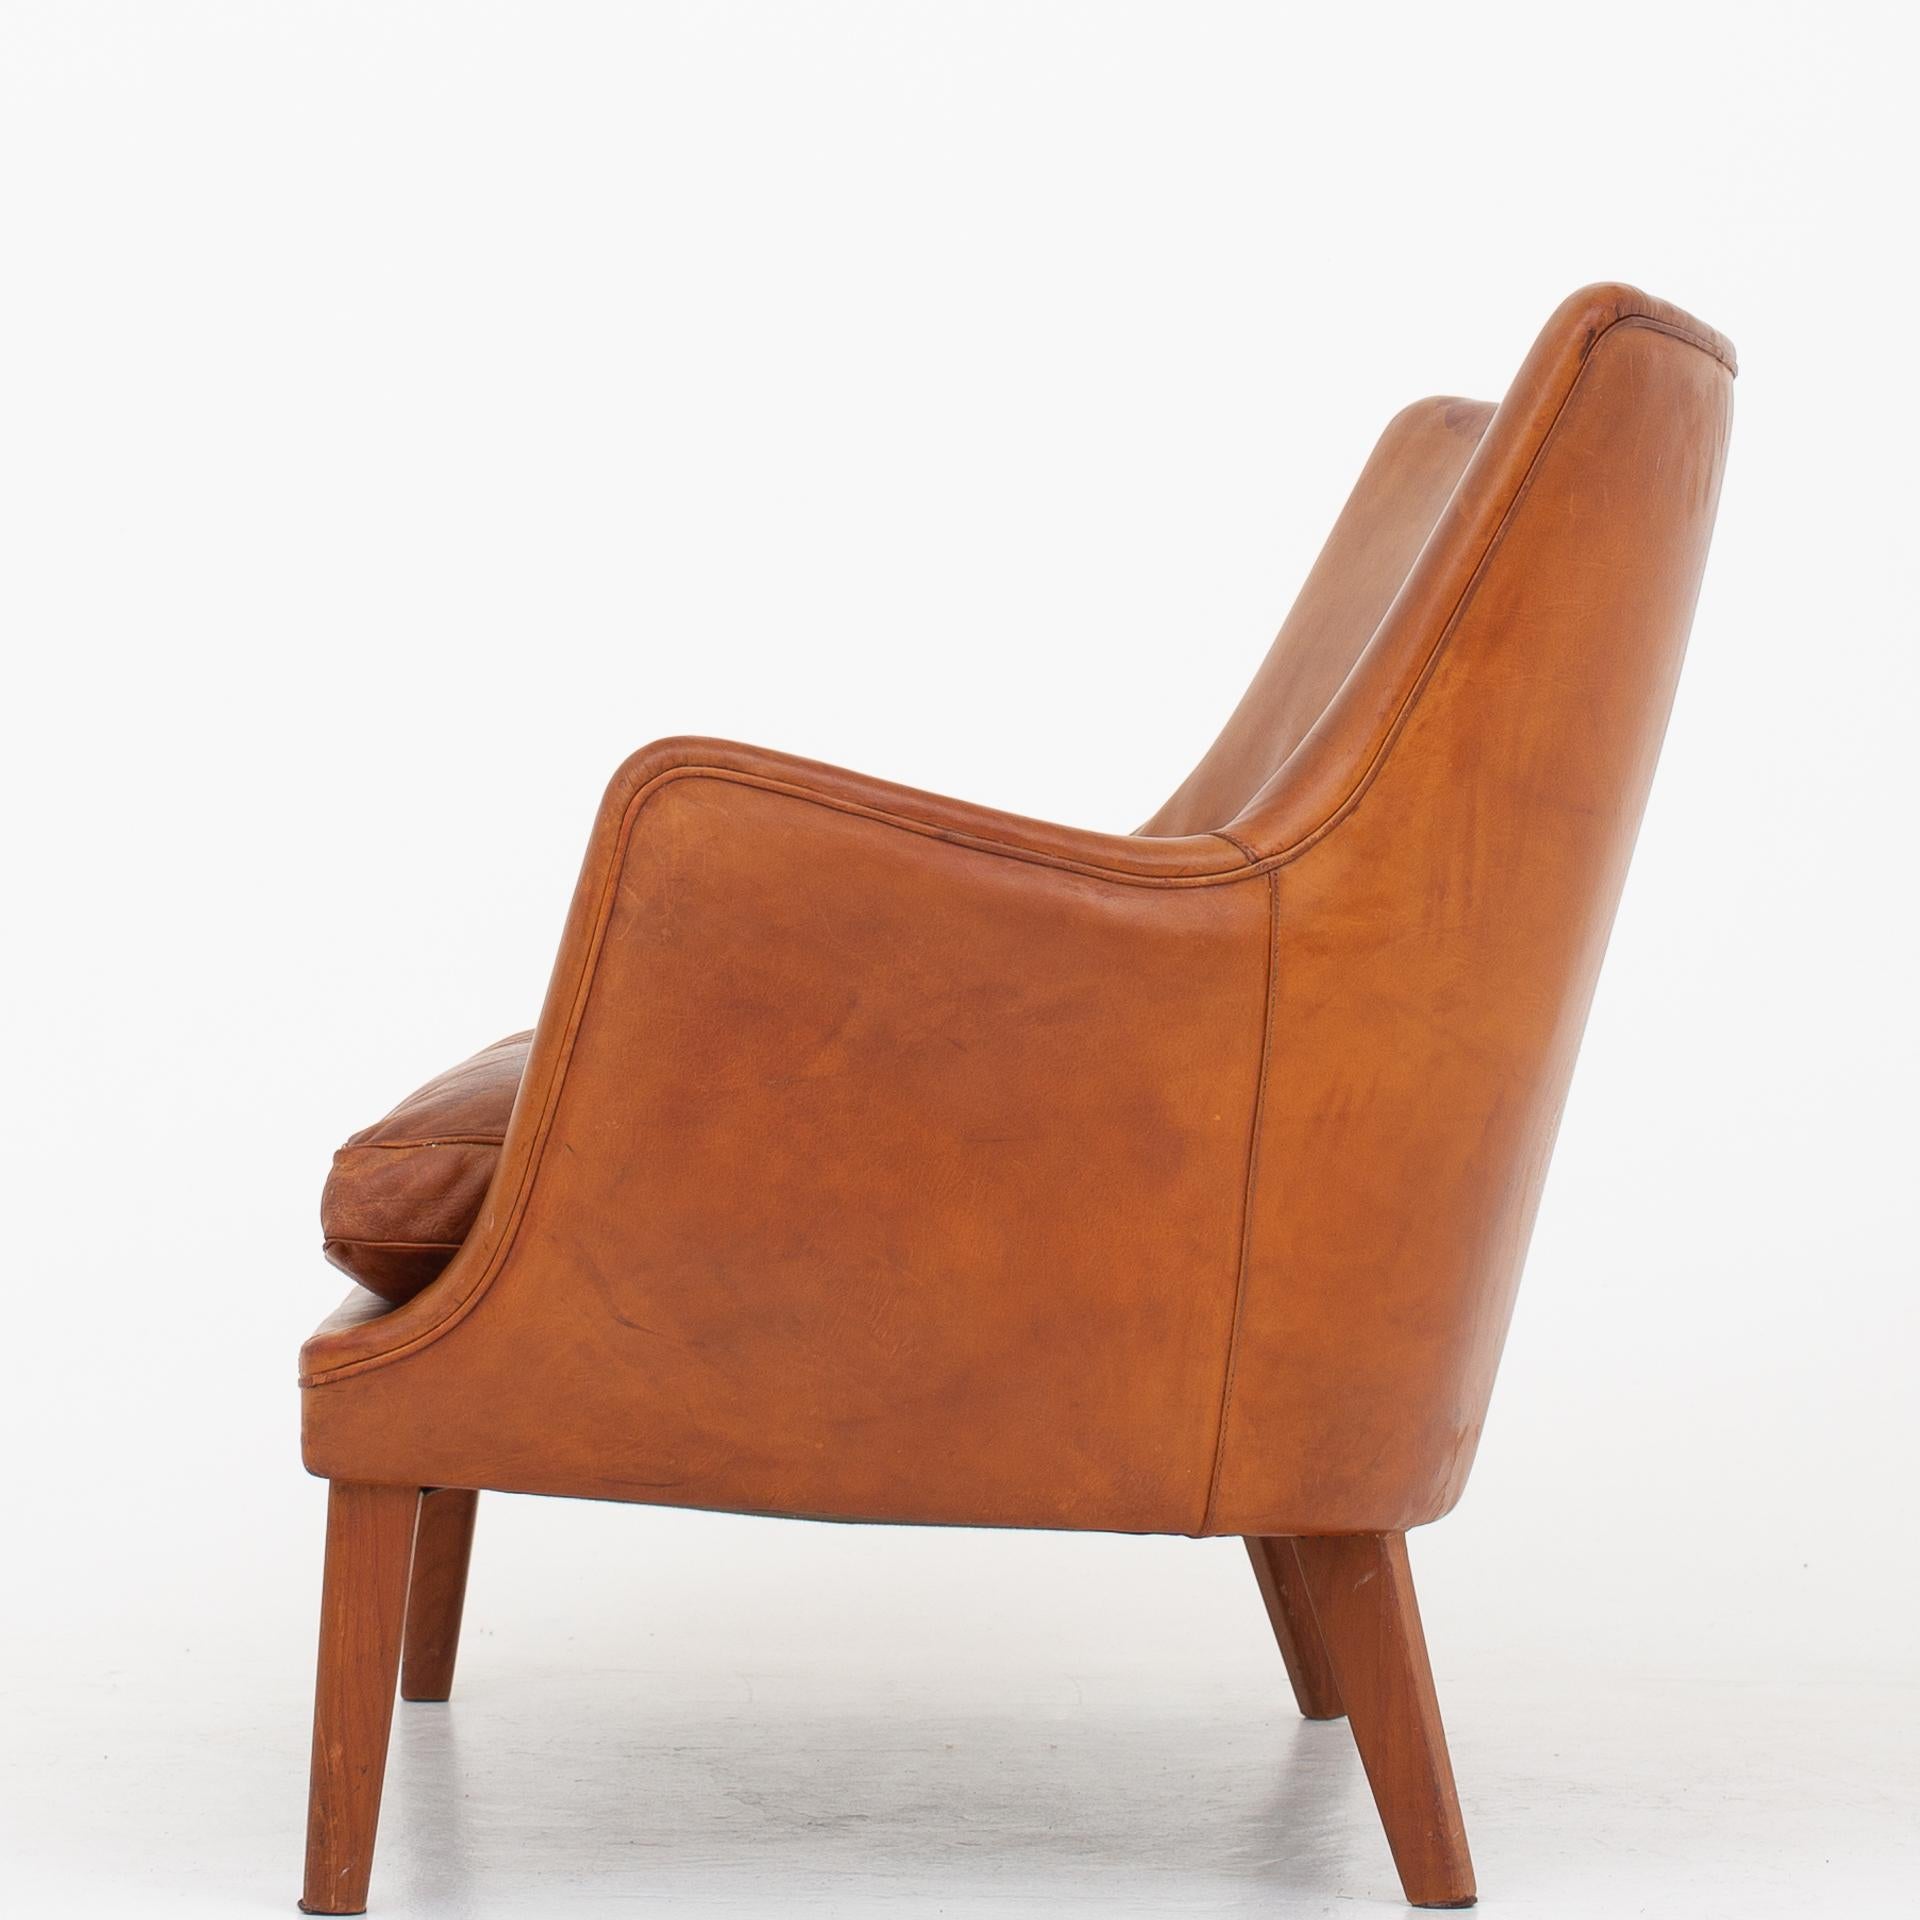 AV 53/2 - Sofa in patinated natural leather with legs in teak. Maker Ivan Schlechter.